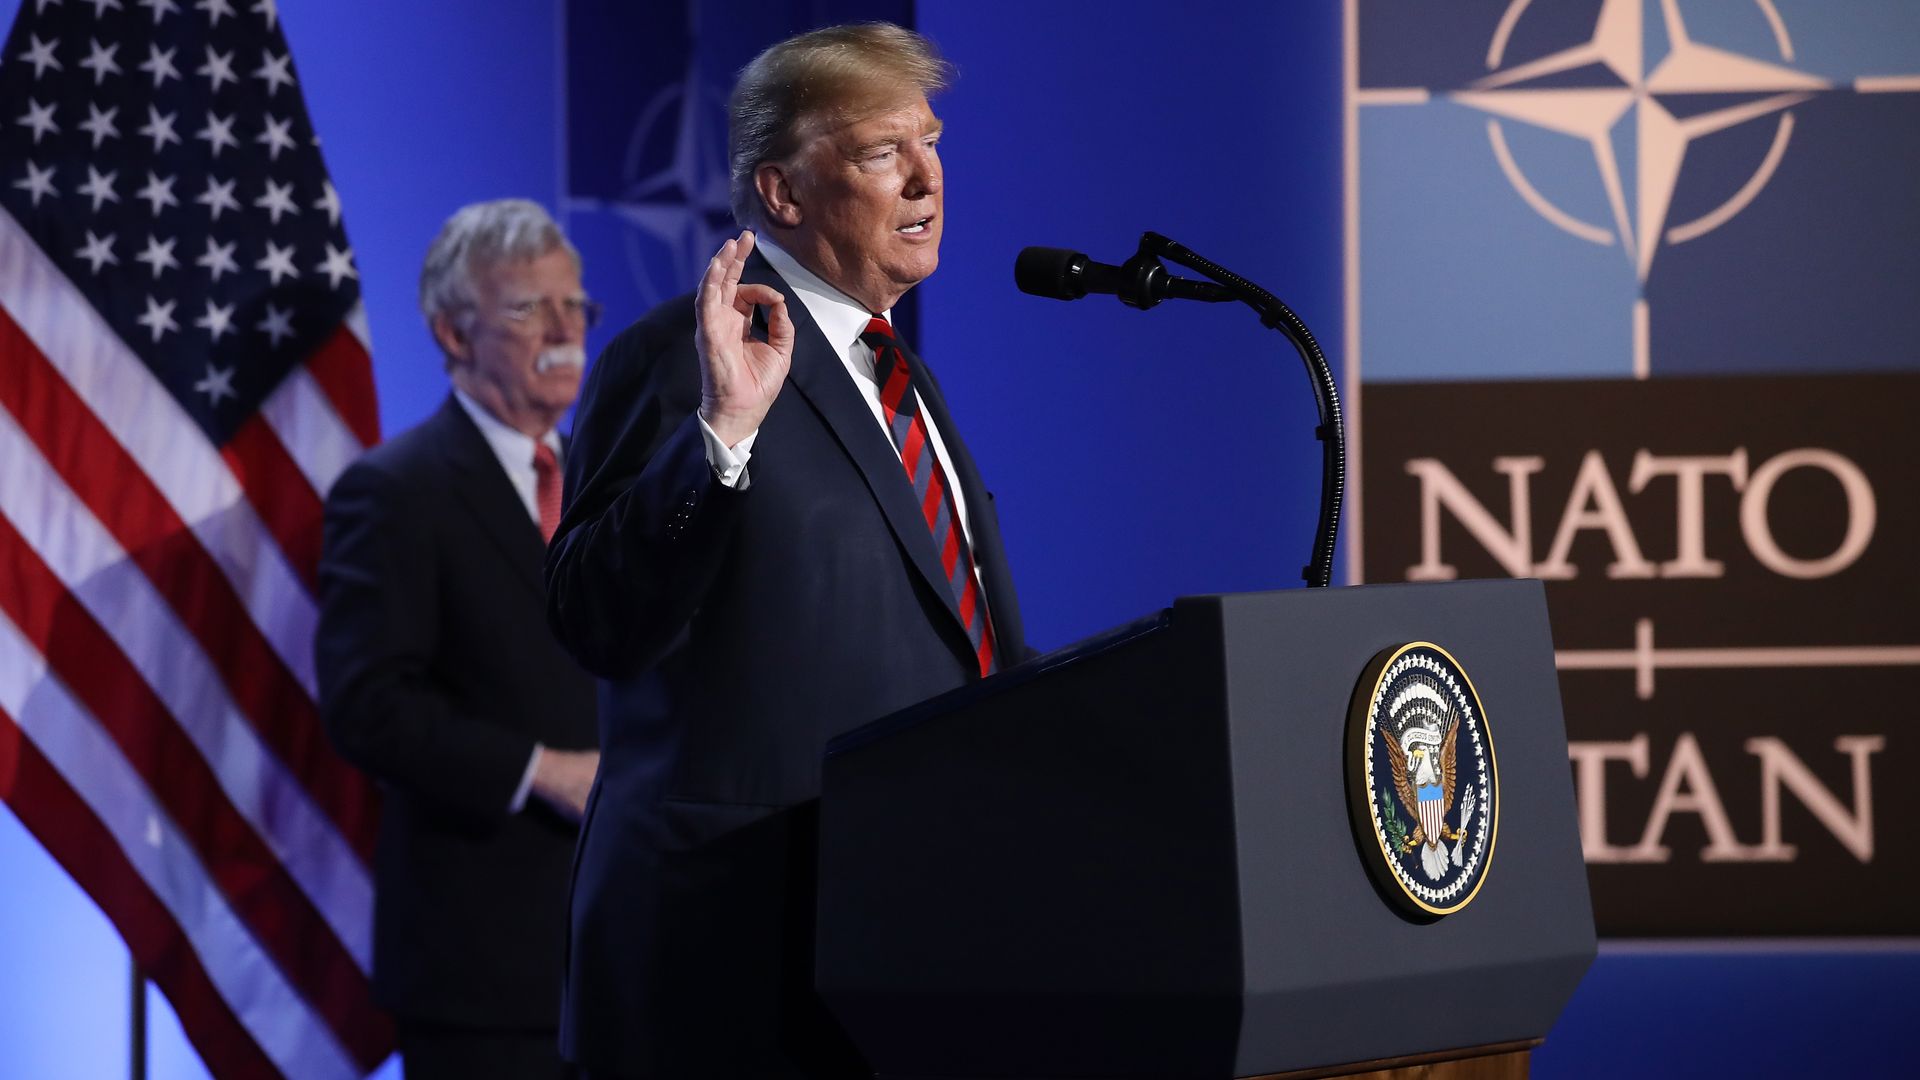 President trump speaks at NATO summit